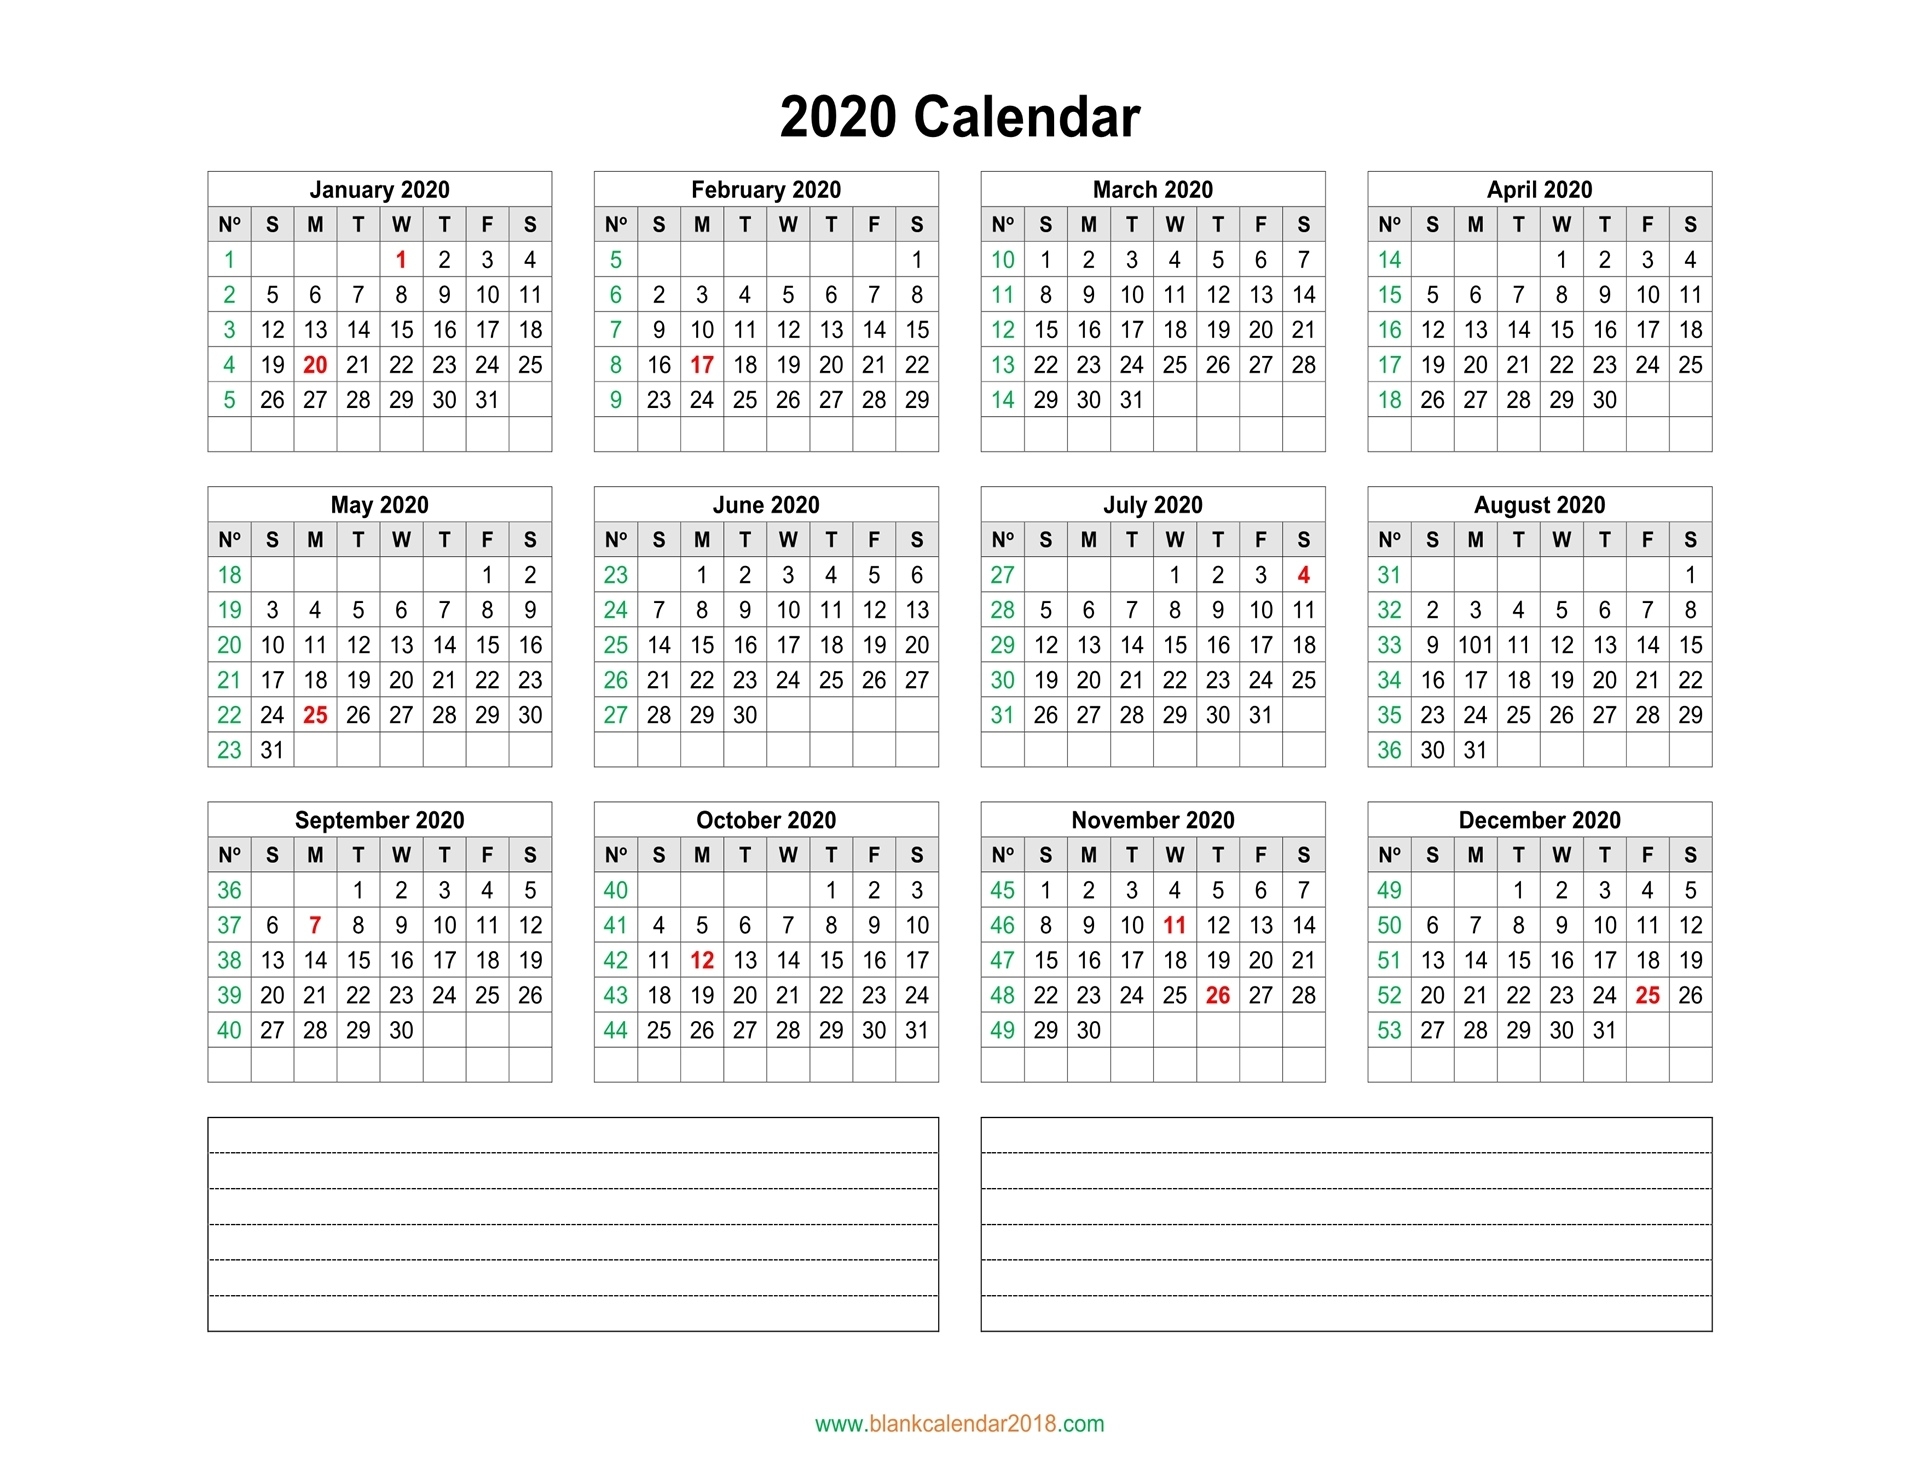 Blank Calendar 2020 Blank Calendar 2020 Starting On Sunday With Week Numbers